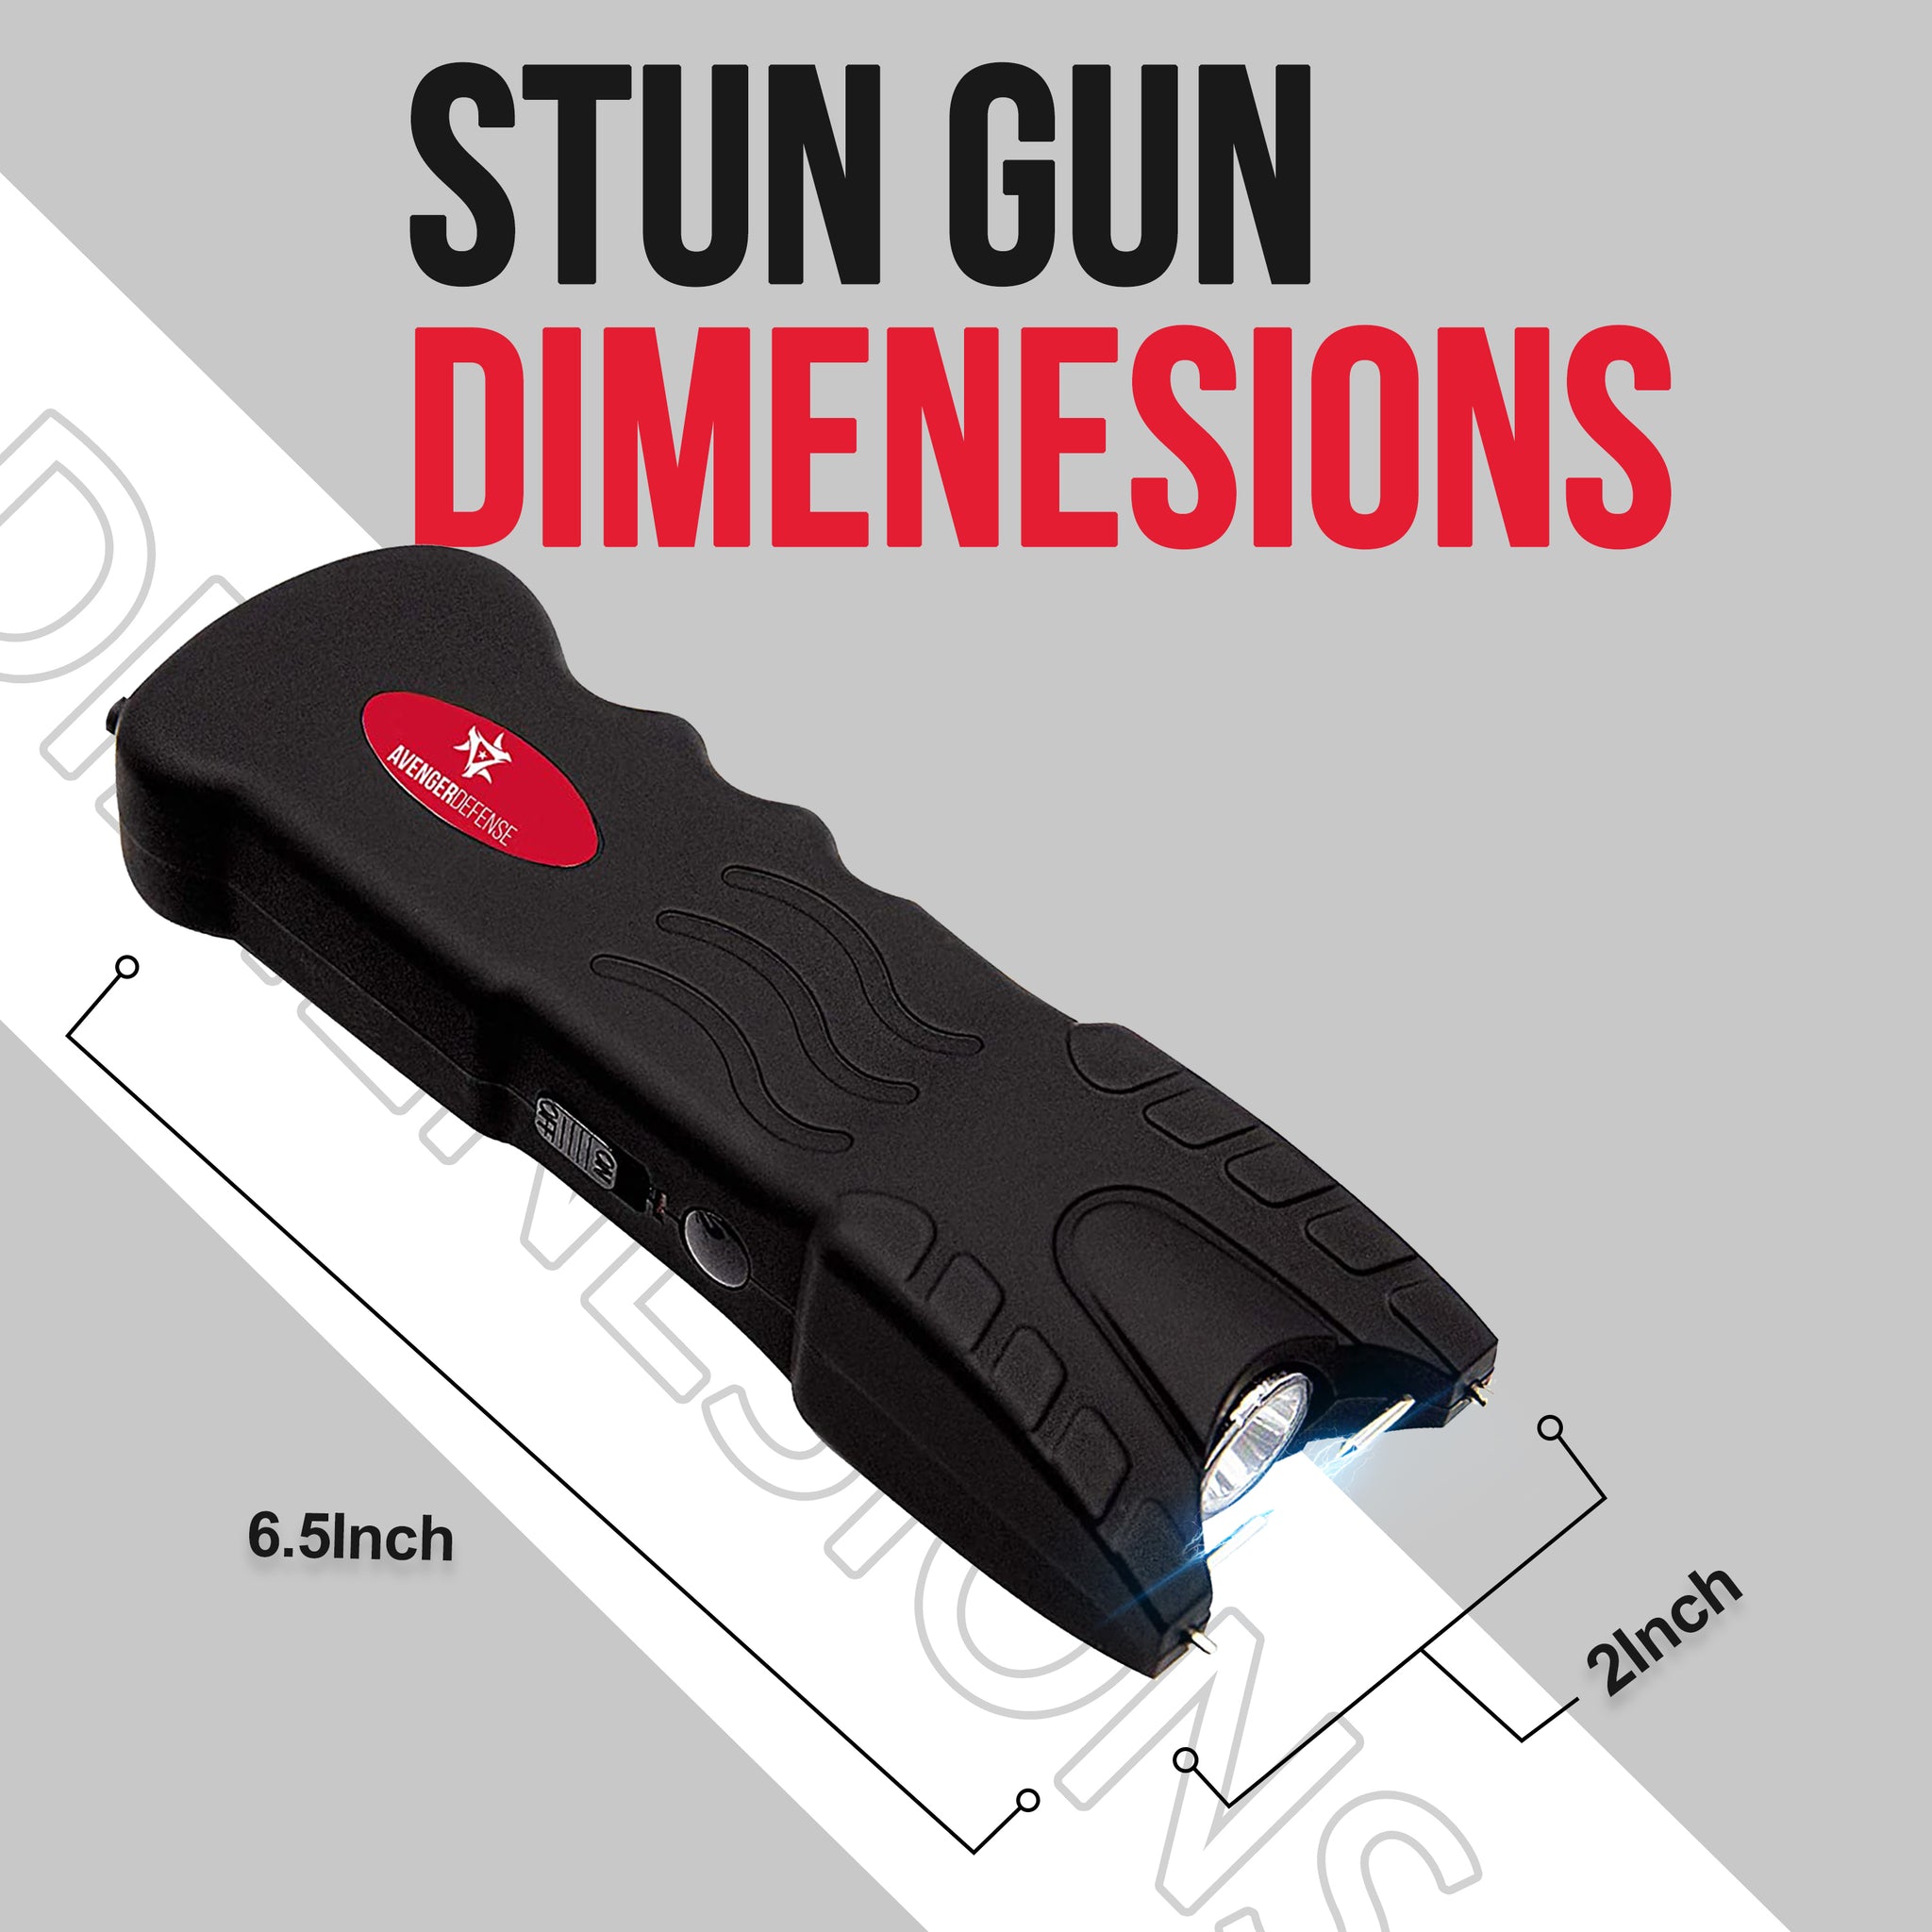 Stun Guns & TASERS for Sale - Buy Powerful Self-Defense Tools